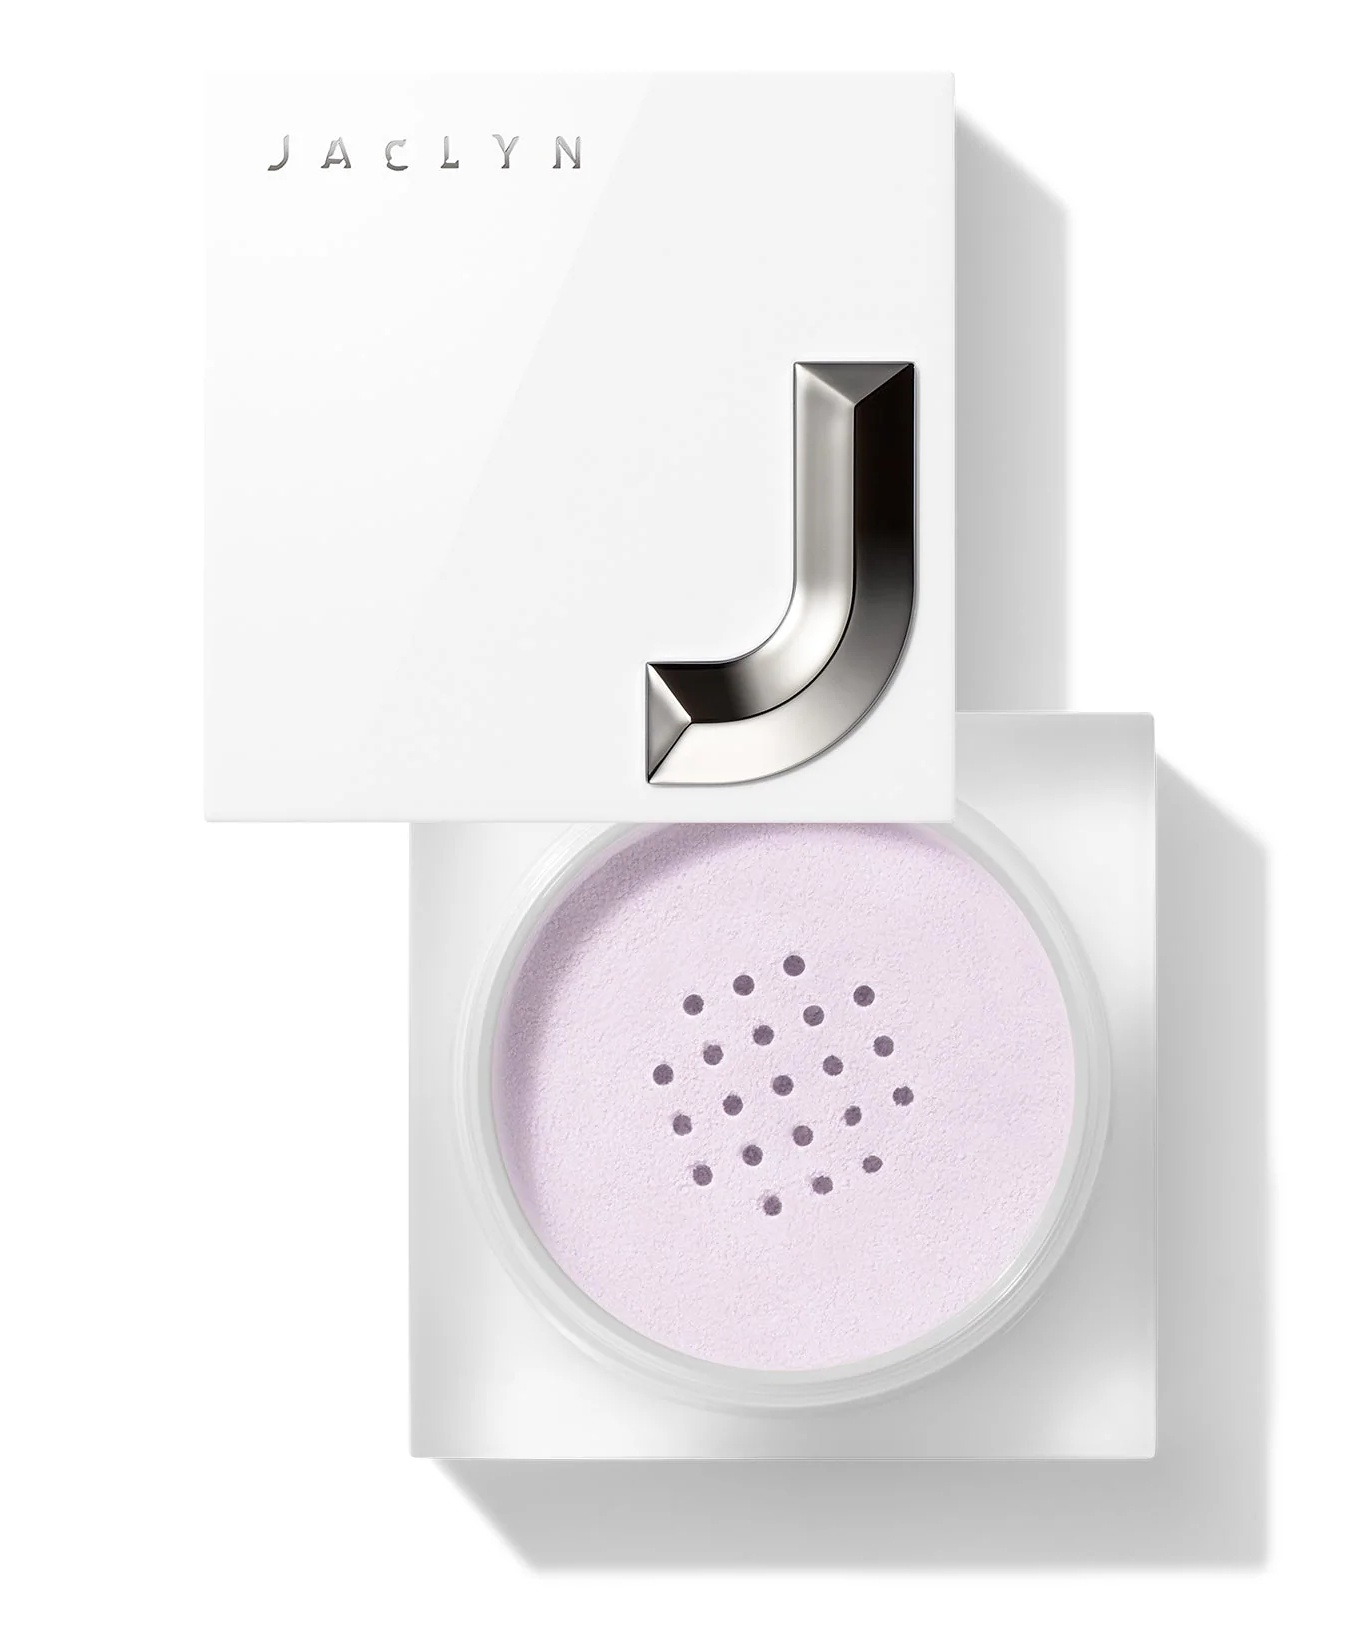 Jaclyn Cosmetics Bake & Brighten Under Eye Powder